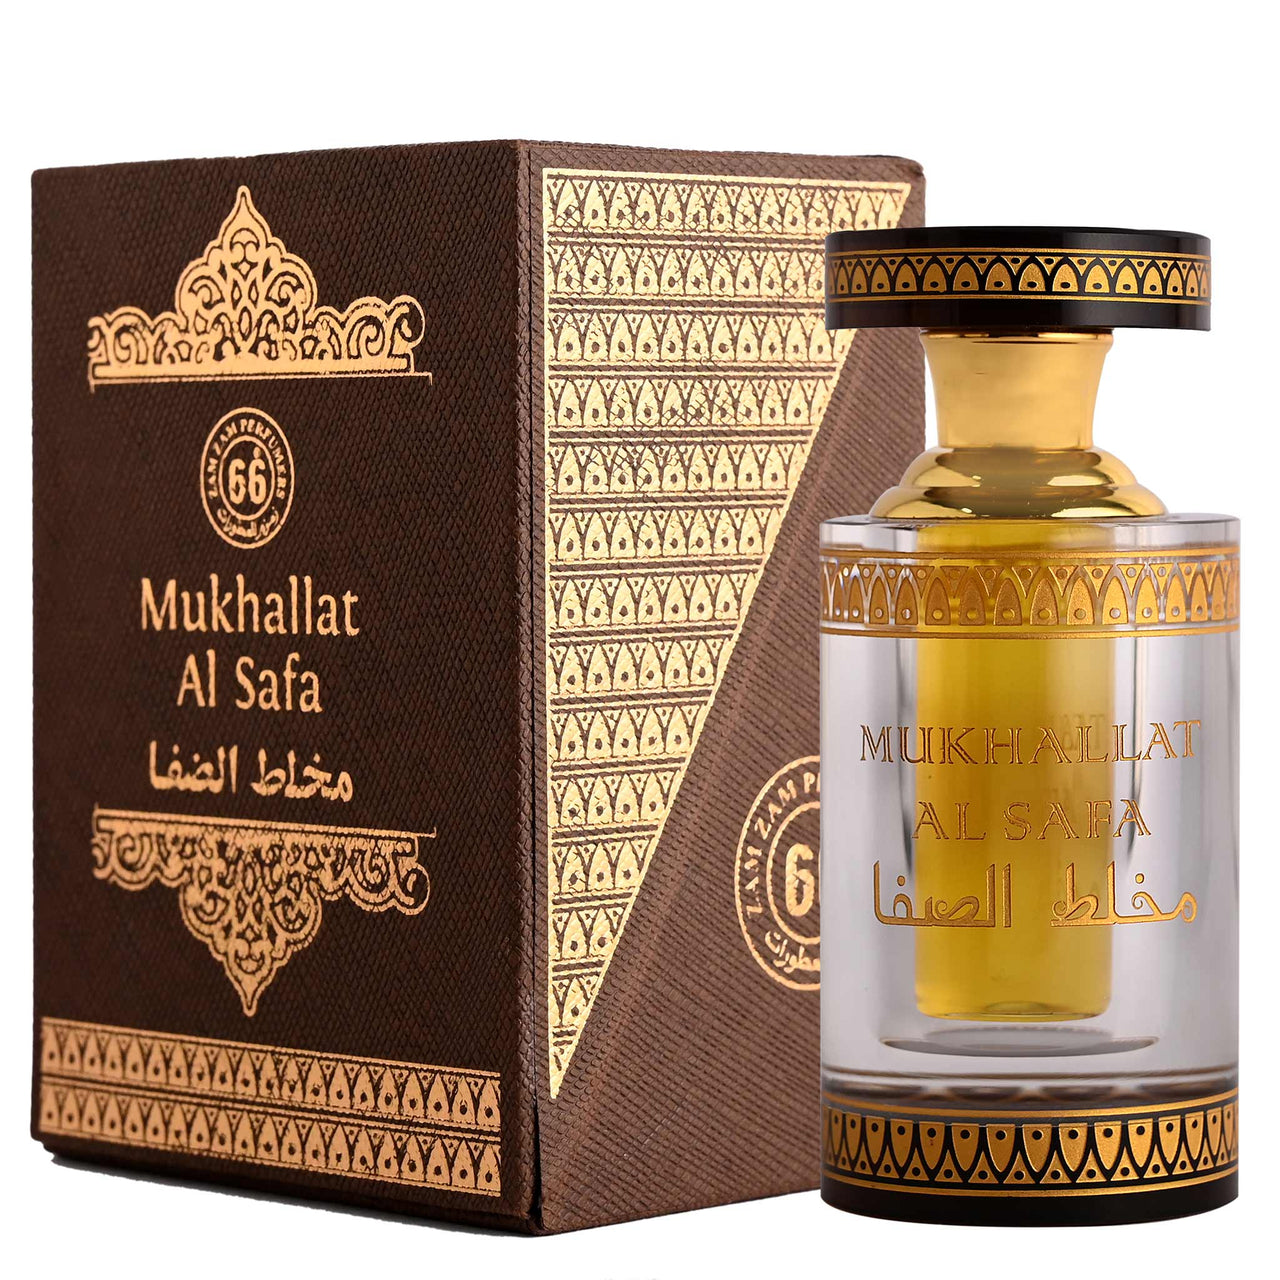 TIMELESS Premium Black Musk Attar is rich, sensual perfume oil